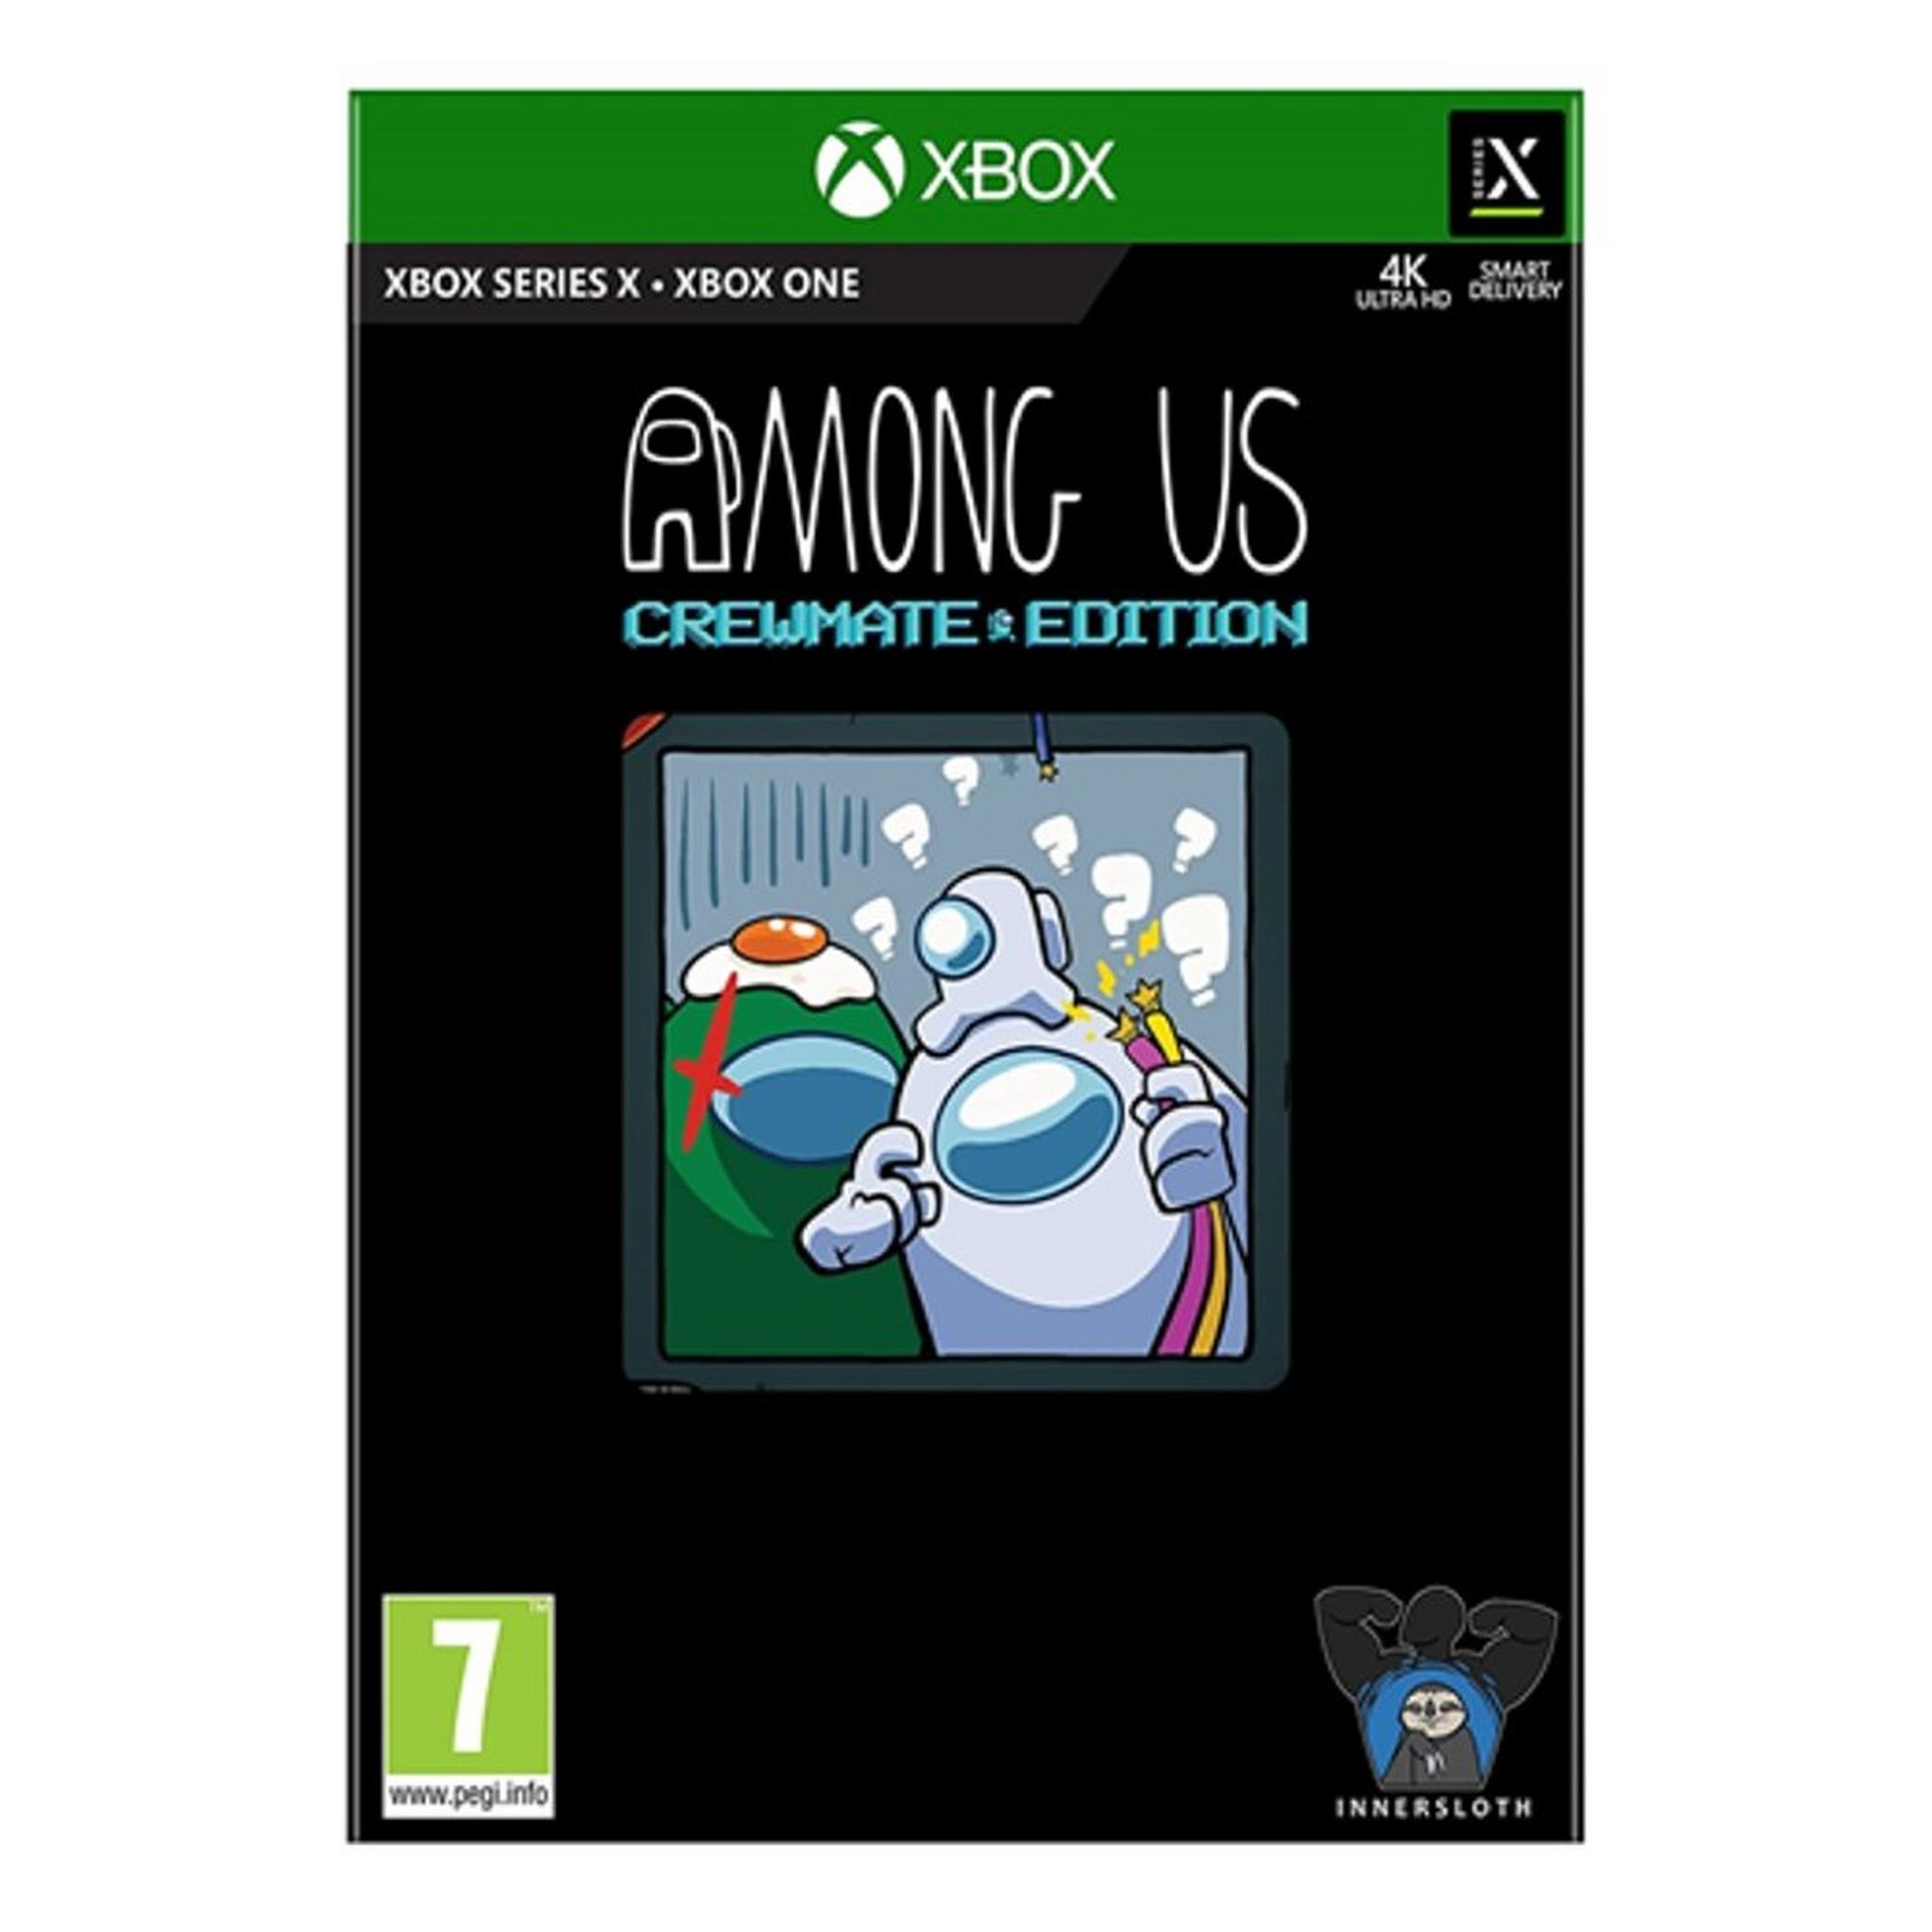 Among Us Crewmate Edition - Xbox Series X Game